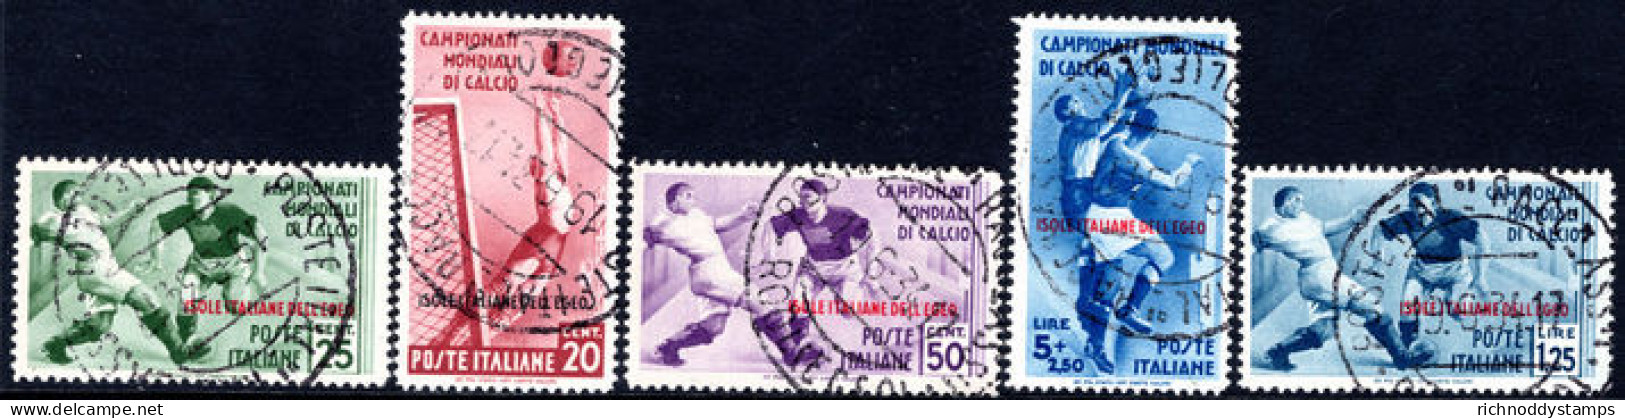 Dodecanese Islands 1934 Football Regular Set Fine Used. - Ägäis